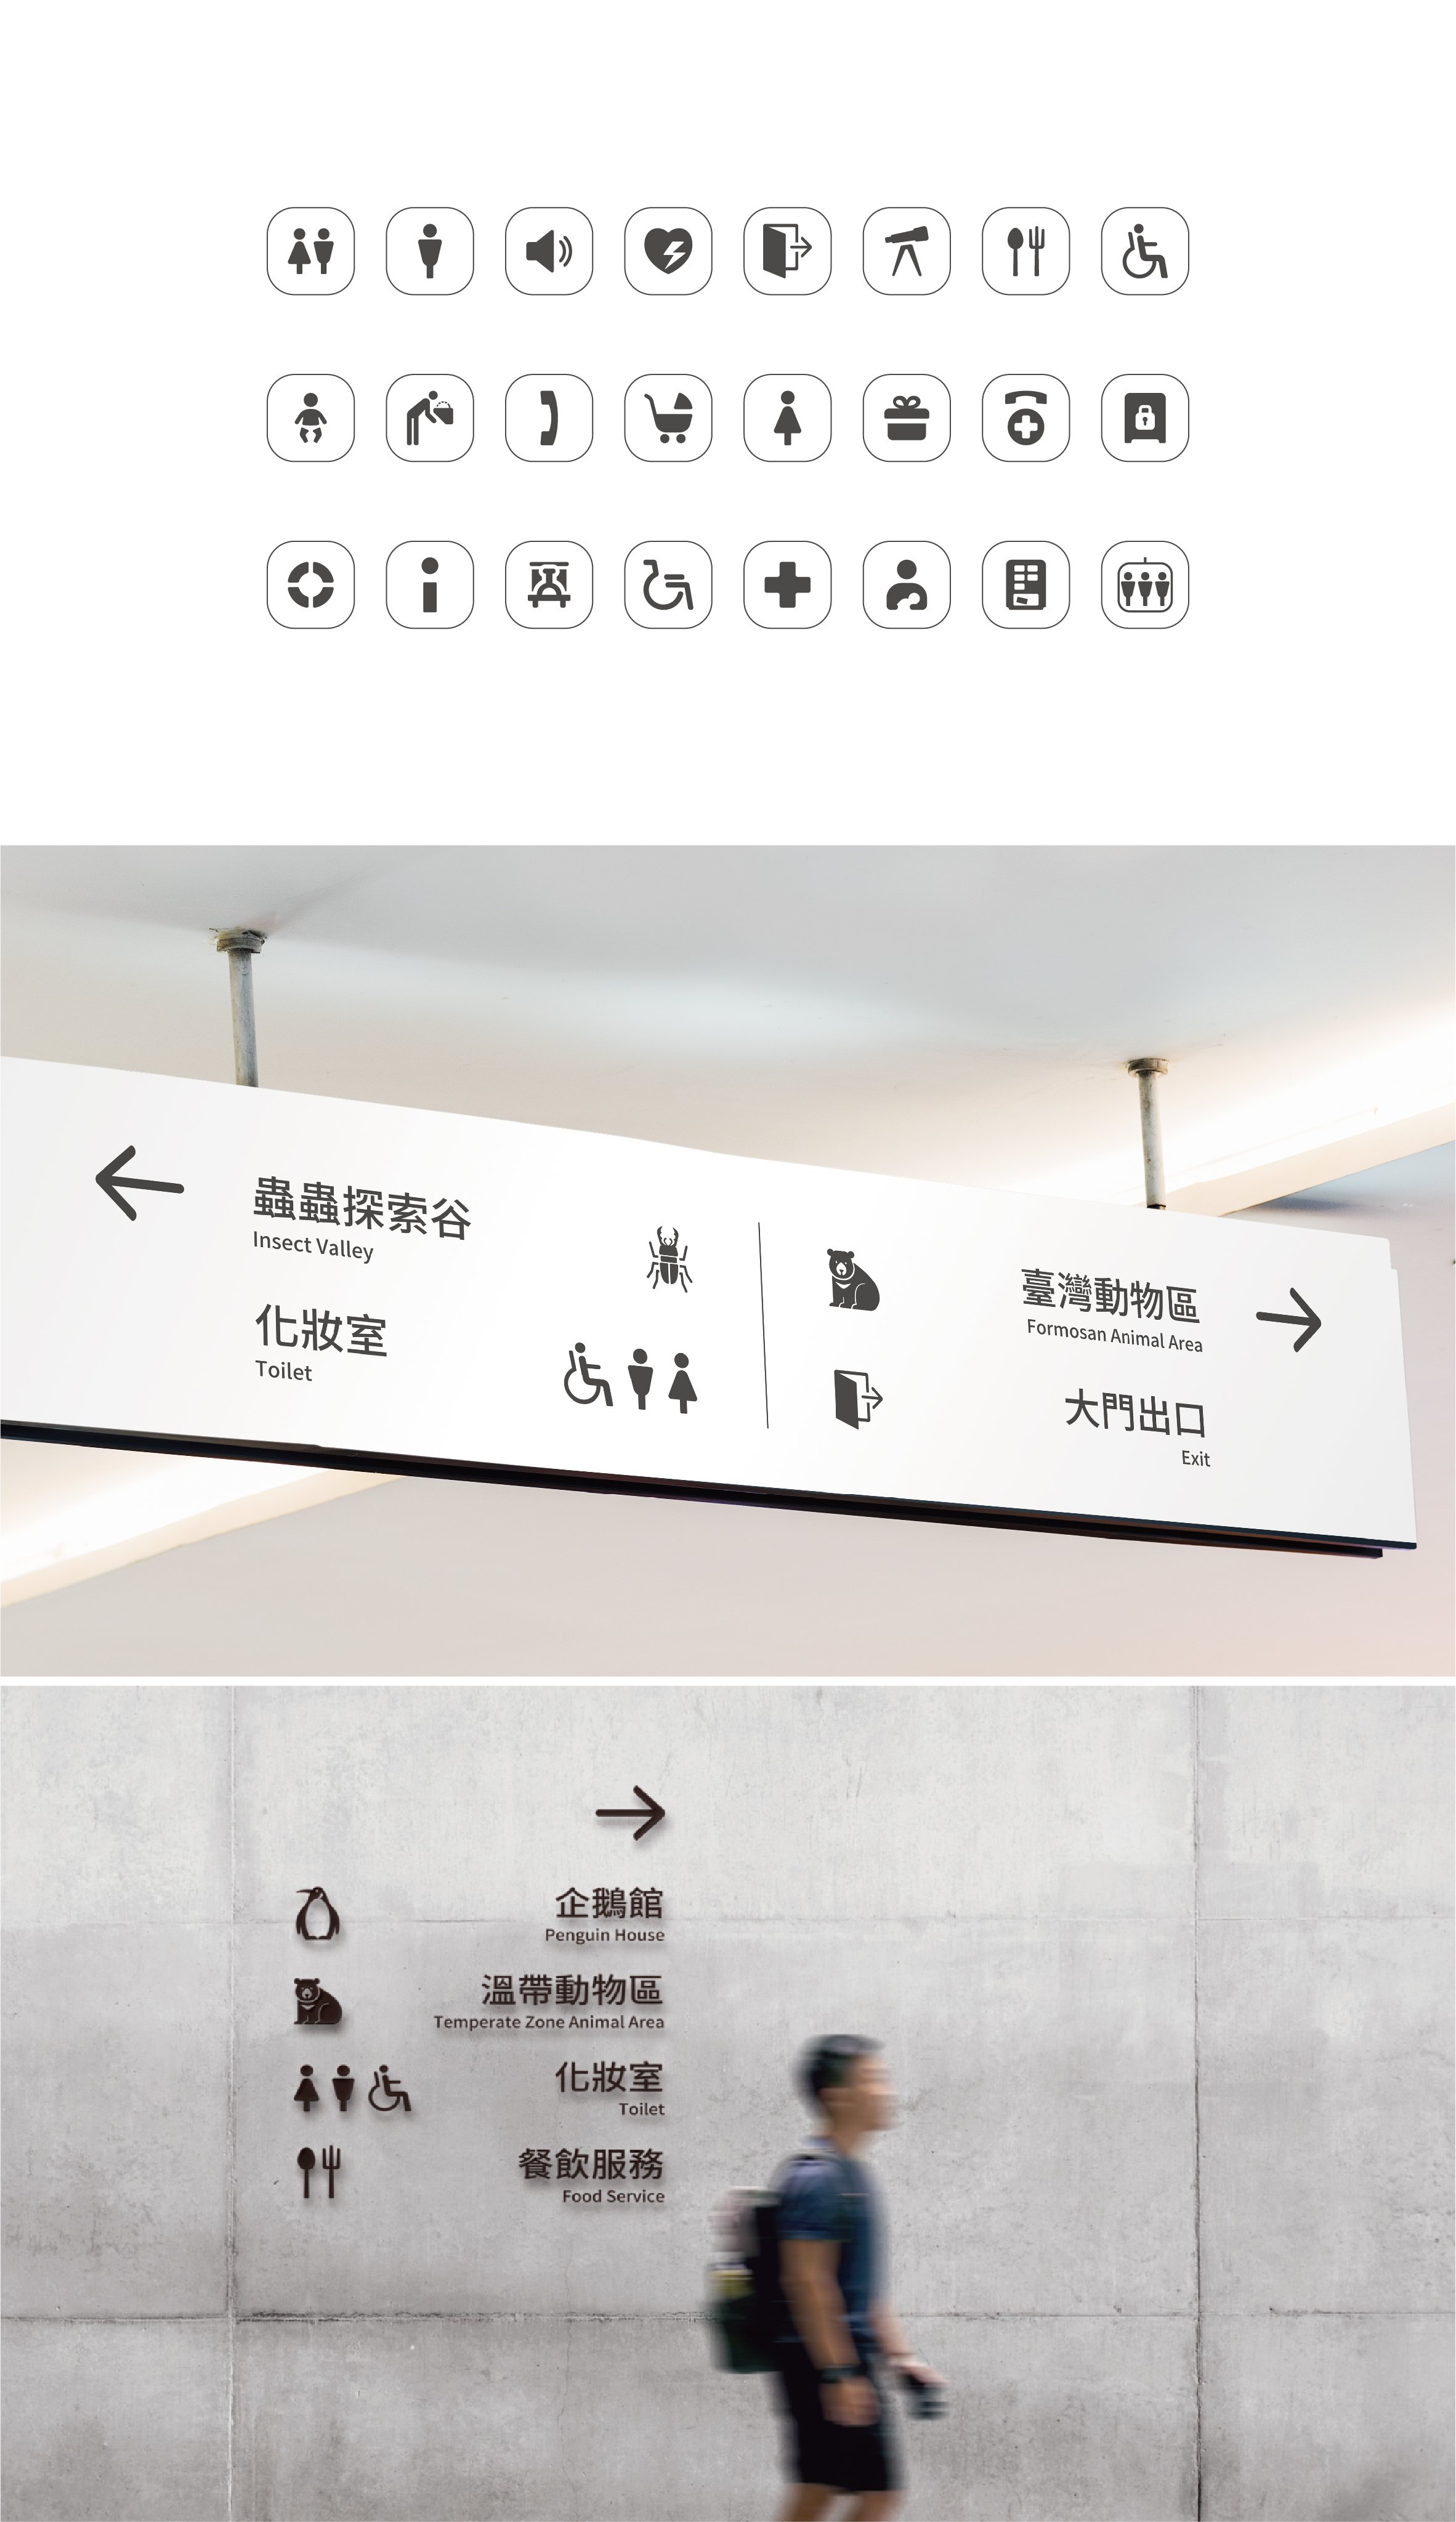 Taipei Zoo Signage Systems